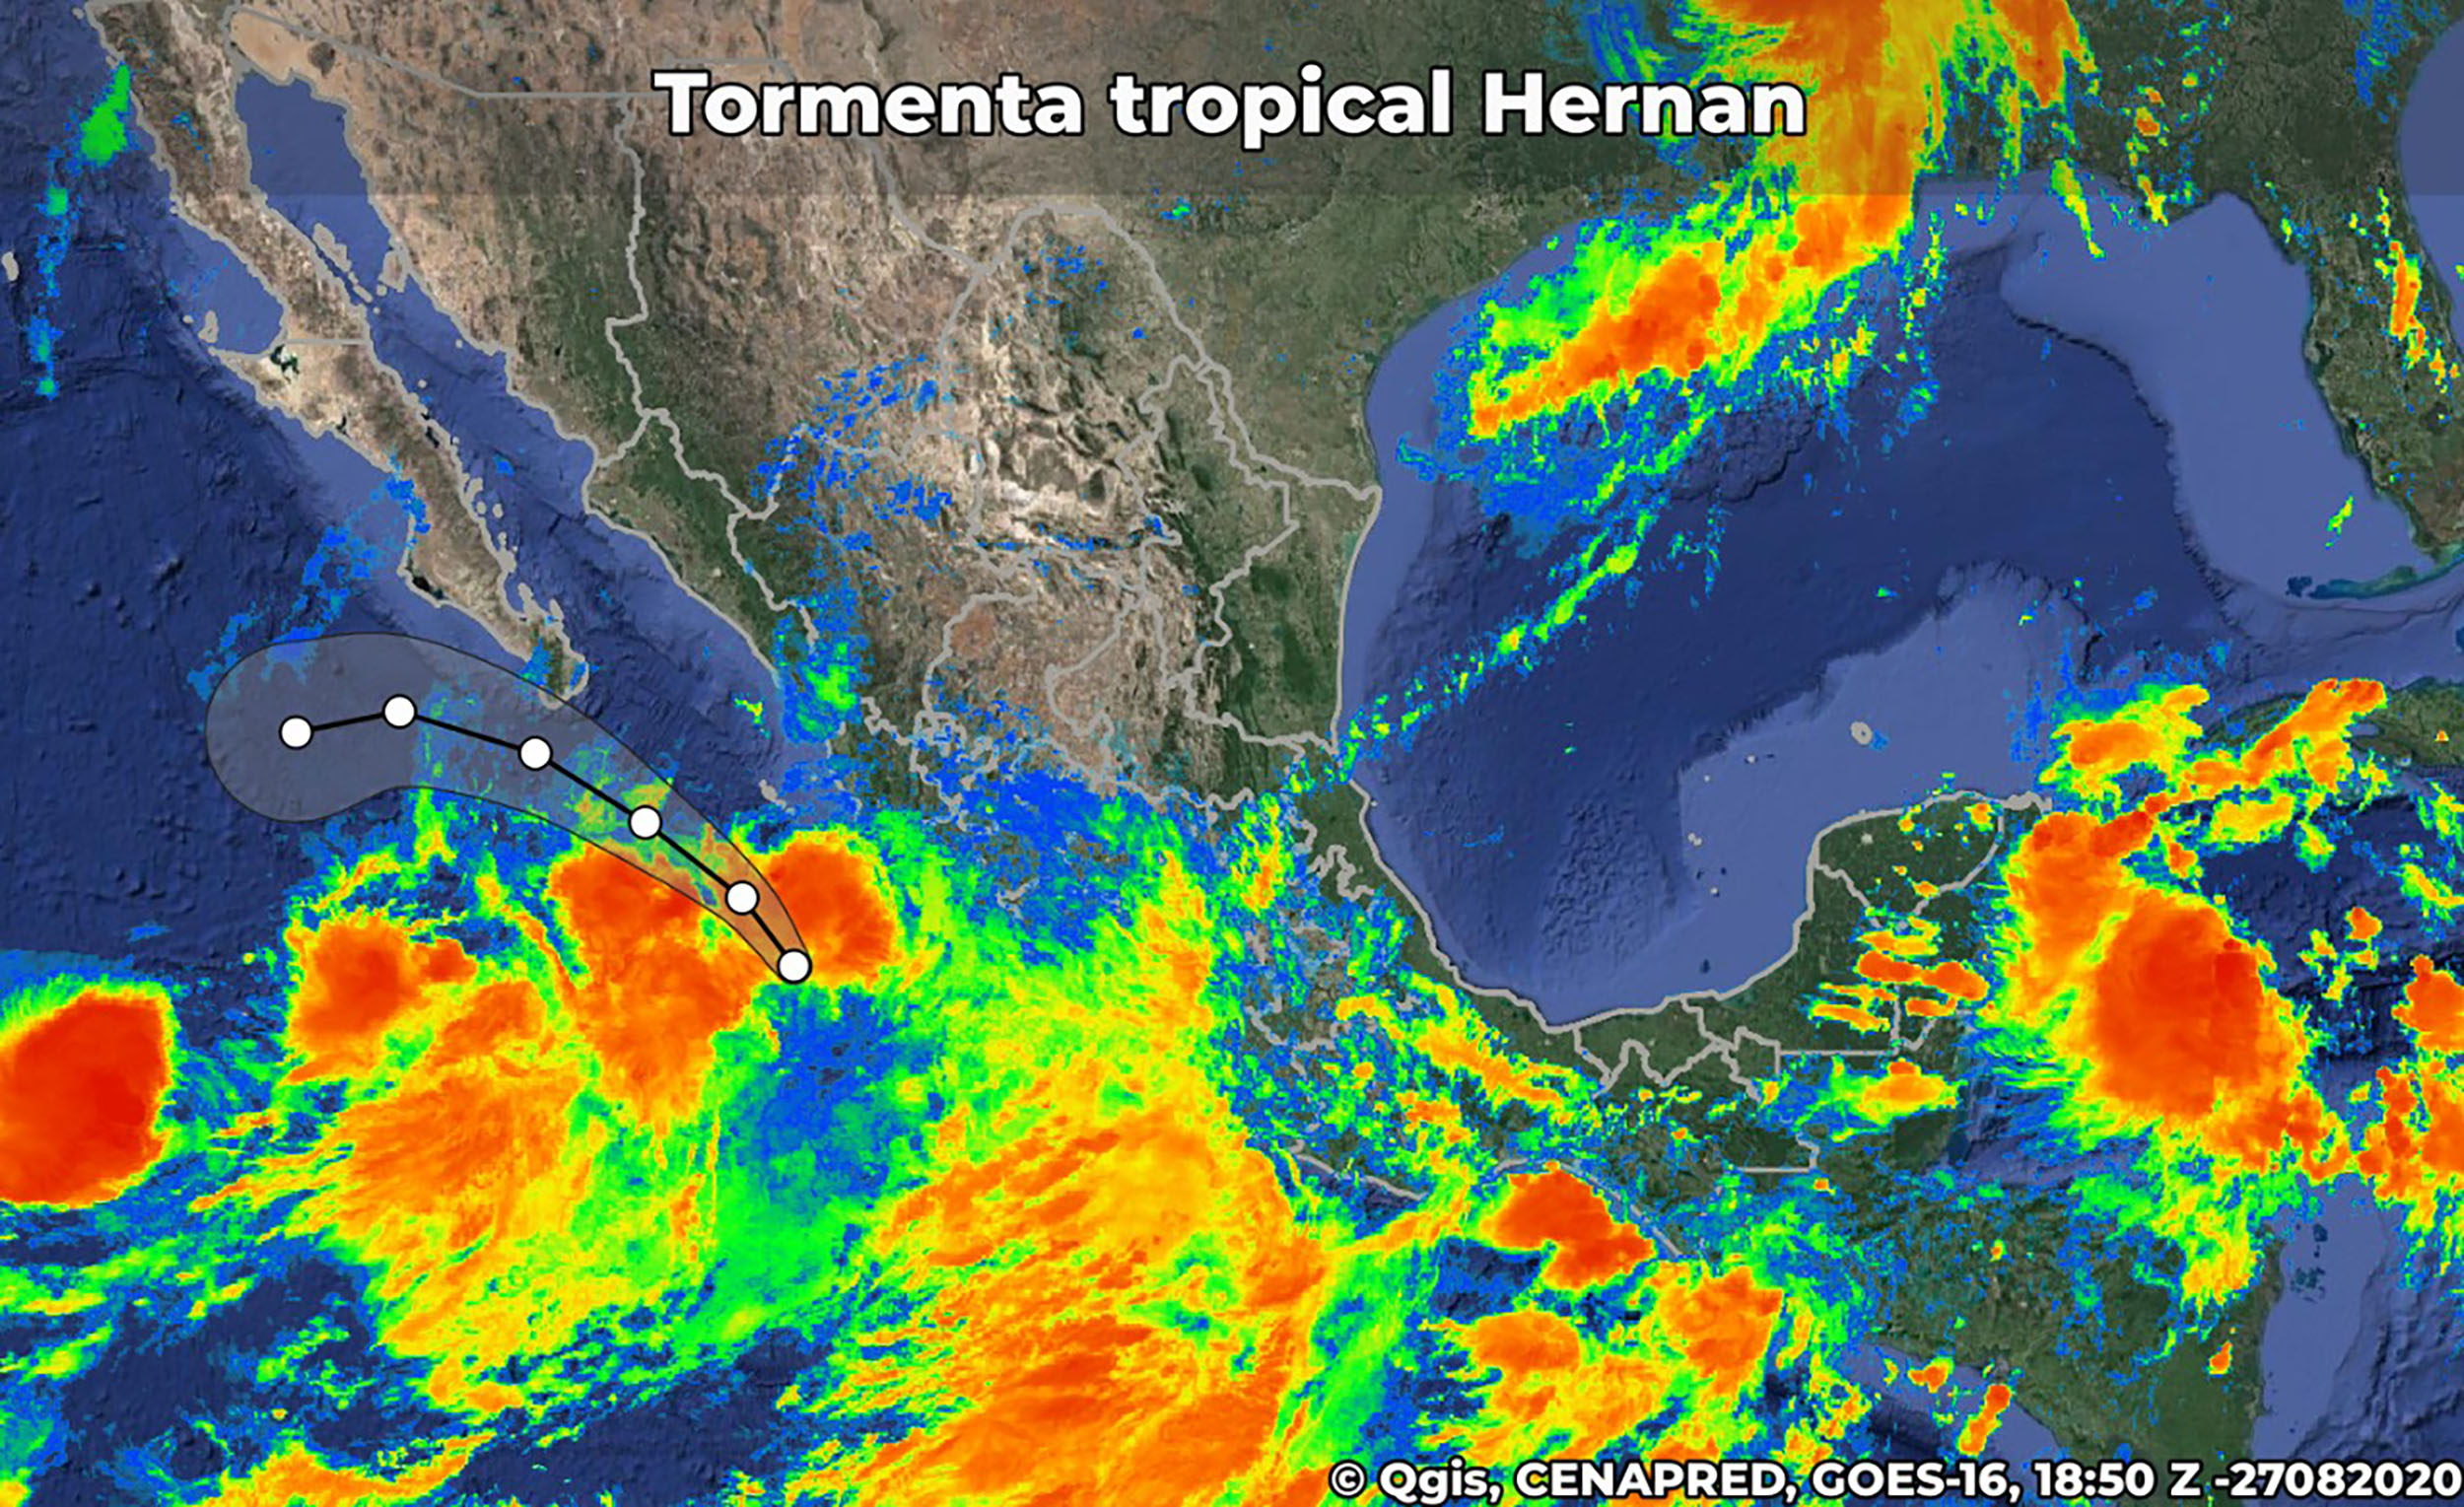 Tormenta tropical Hernan